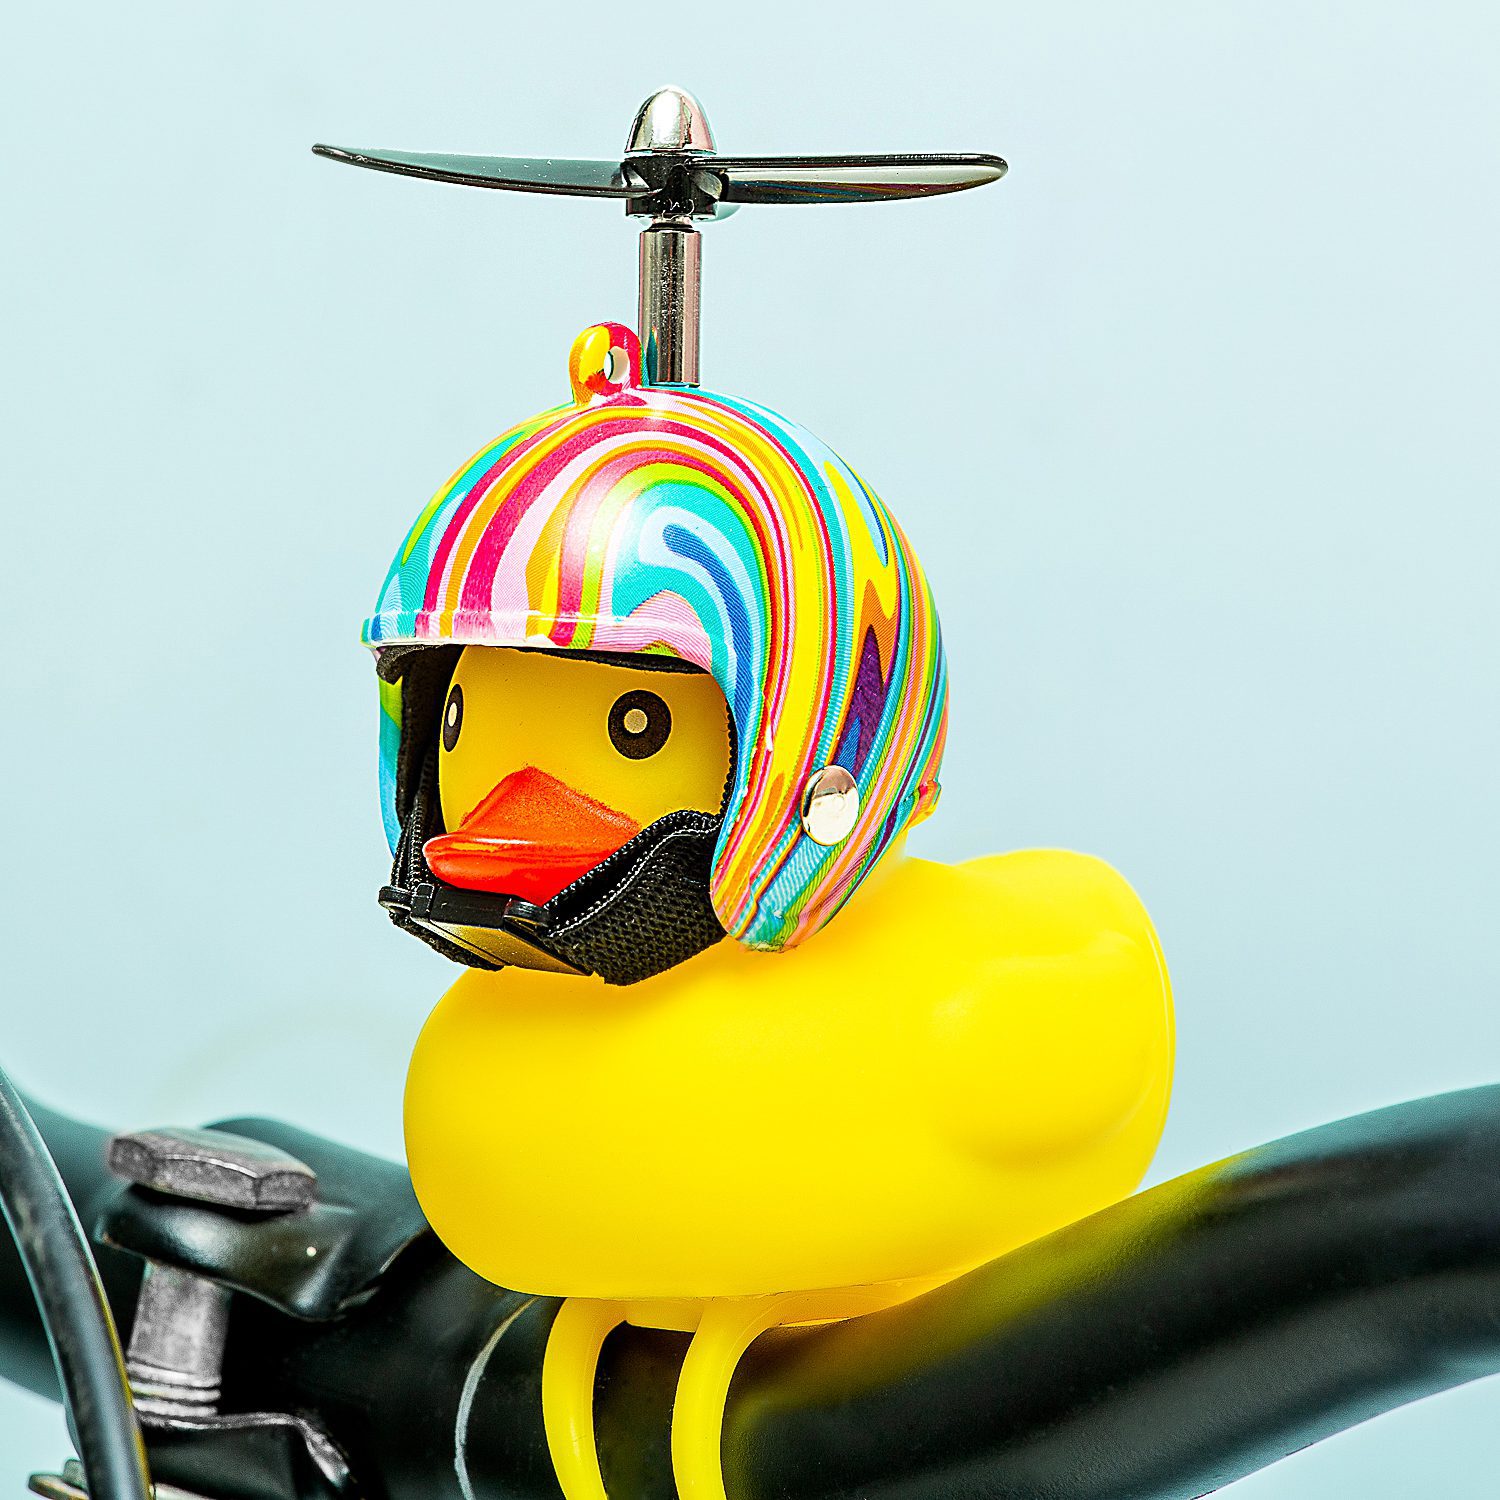 353821 885703 Bike duck Winkee – child